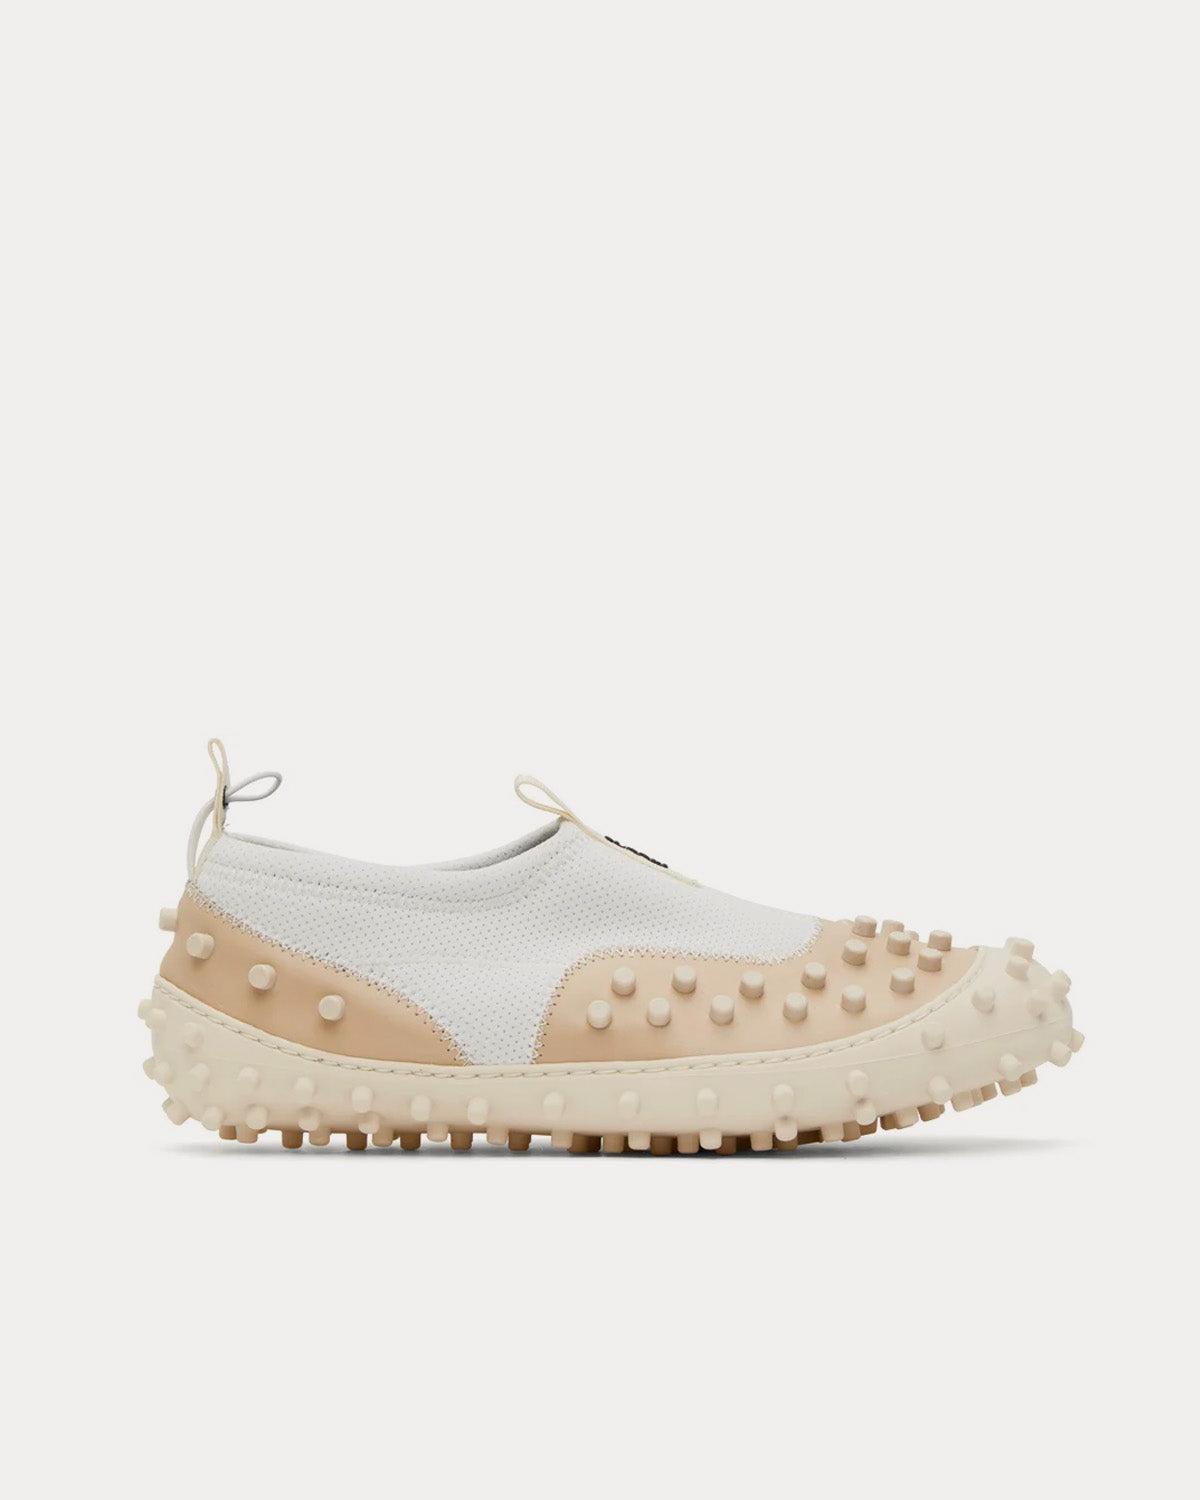 Sunnei - 1000CHIODI White / Beige Slip On Sneakers